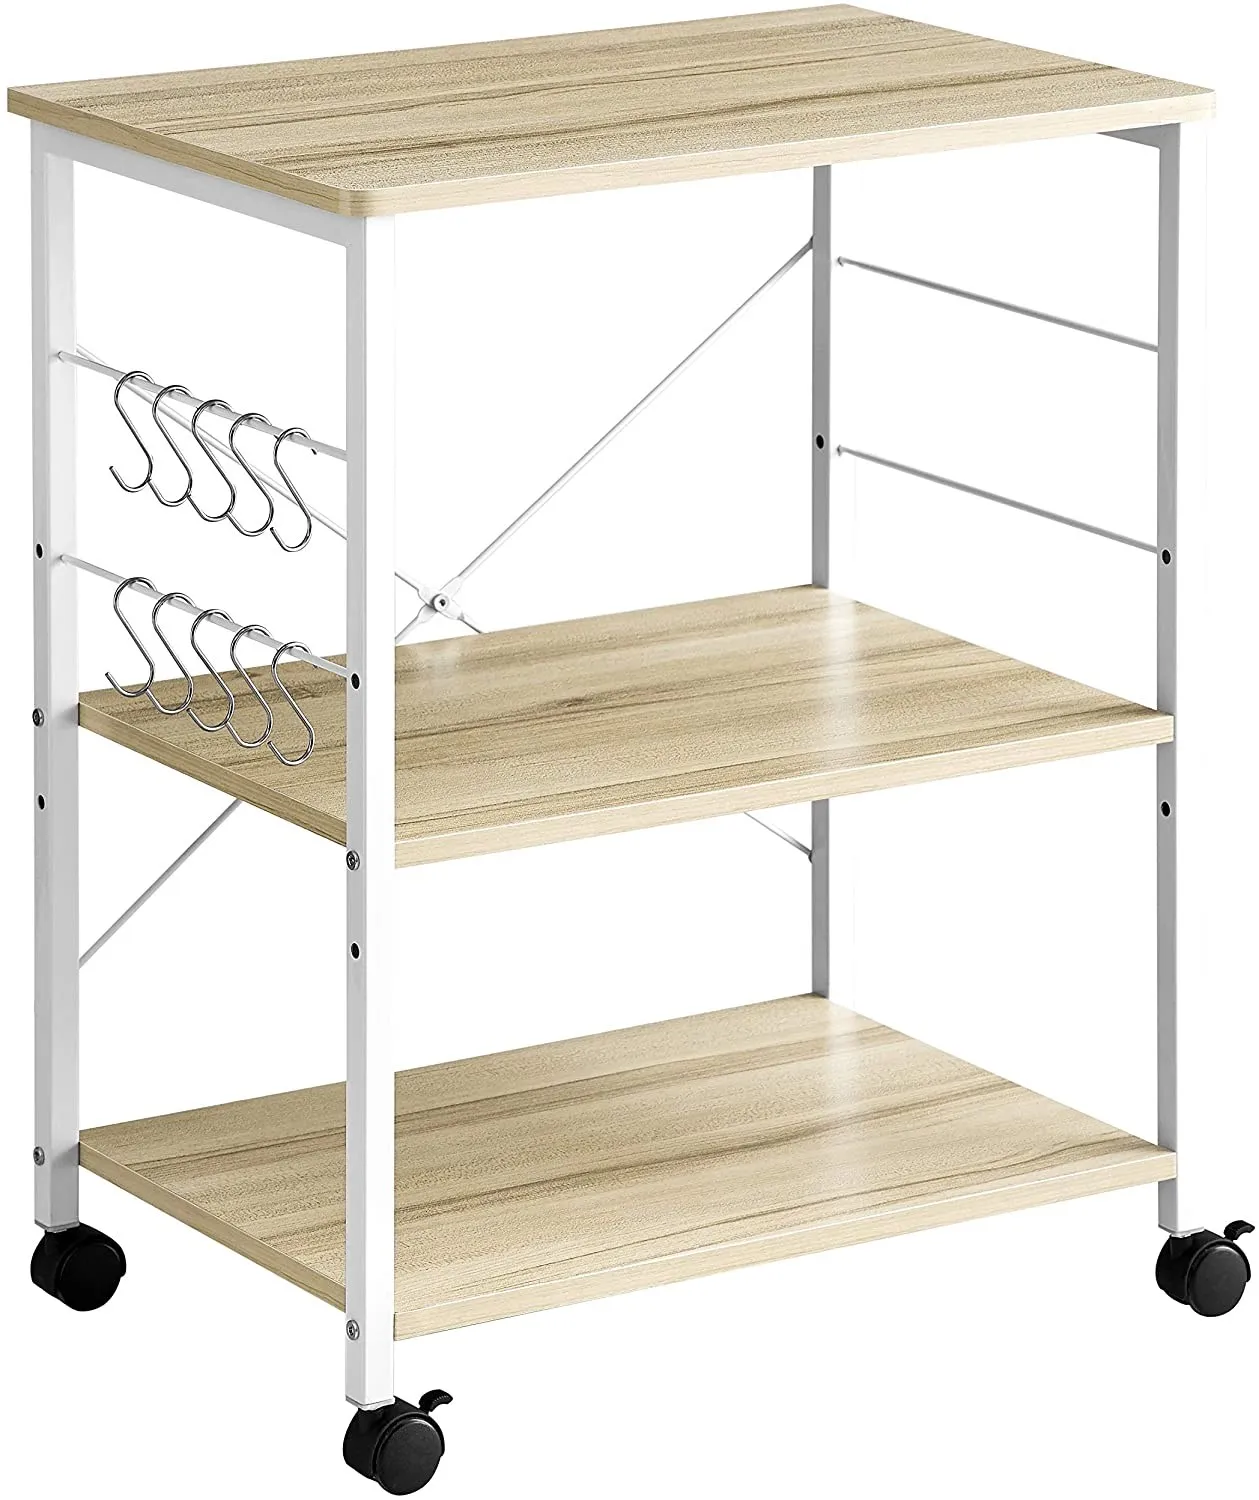 
Kitchen storage holders 3 tier metal wood microwave oven shelf stand appliances storage rack cabinet  (1600166429403)